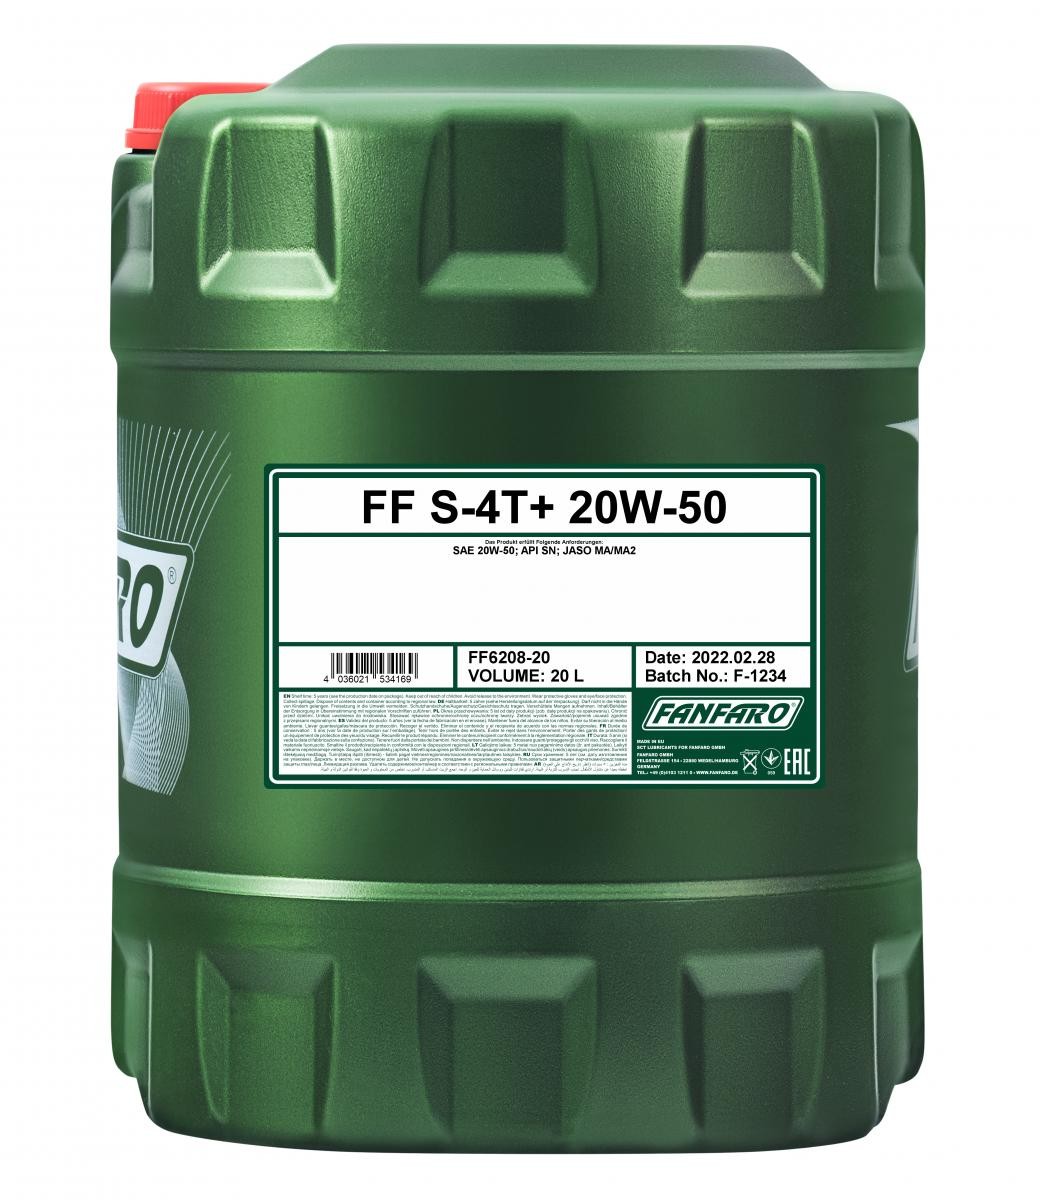 FF6208-20 FANFARO S-4T+ 20W-50, 20l Motoröl FF6208-20 günstig kaufen